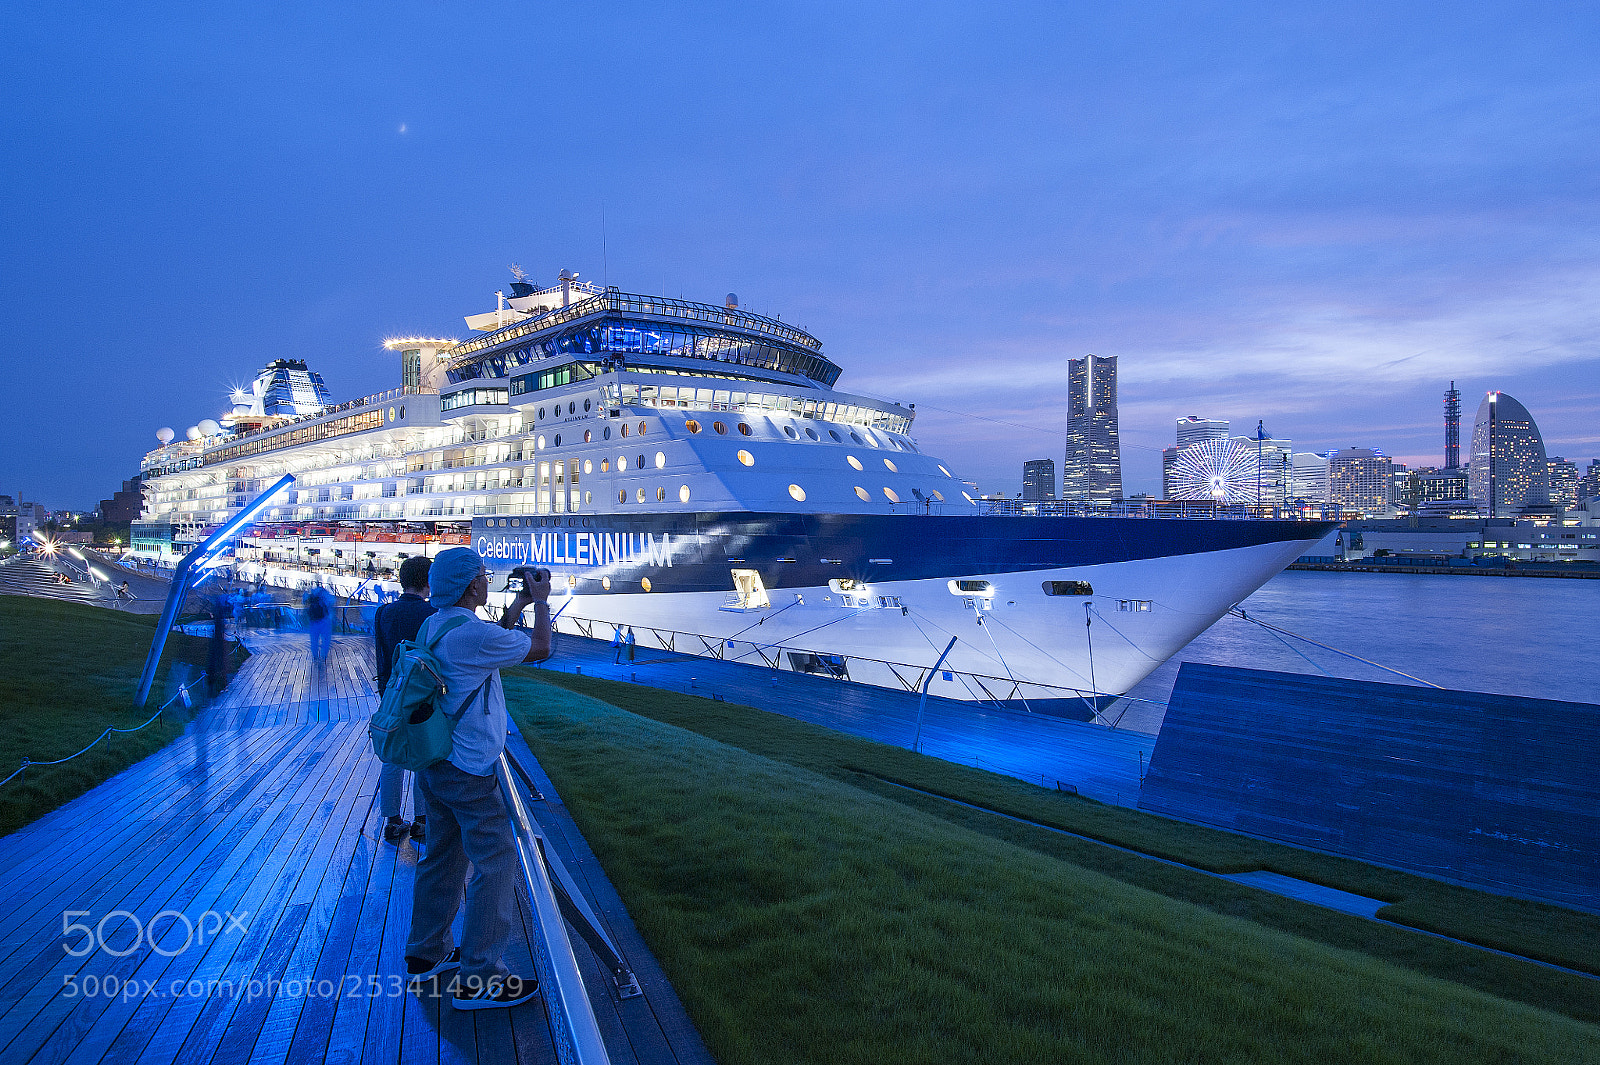 Nikon D3 sample photo. Cruise ships> celebrity millennium photography